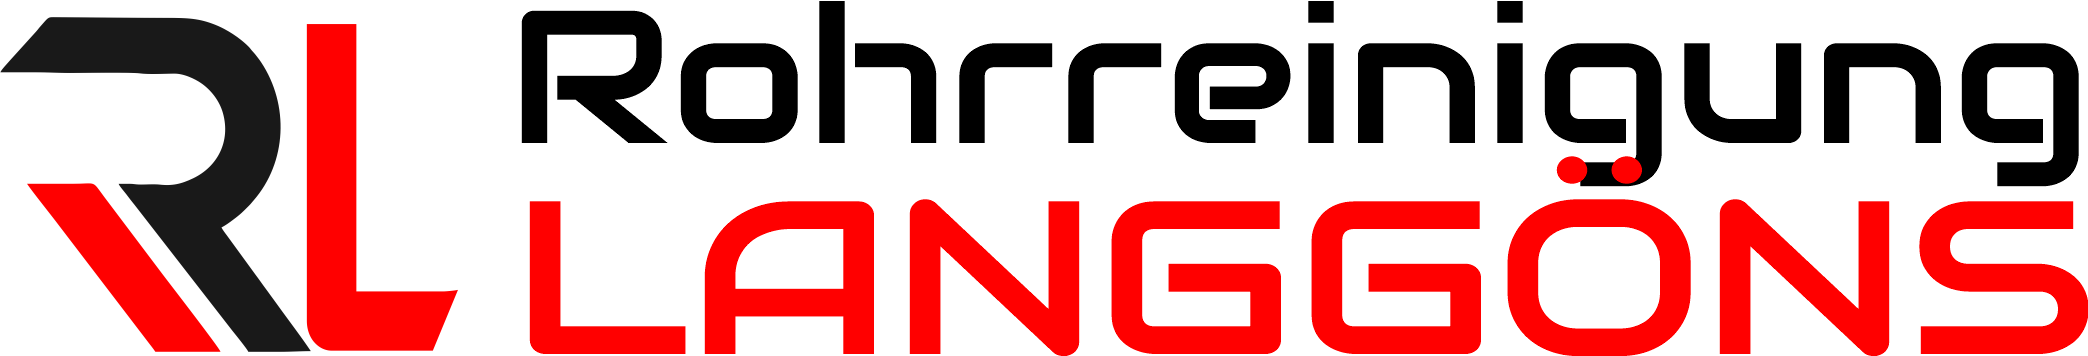 Rohrreinigung Langgöns Logo